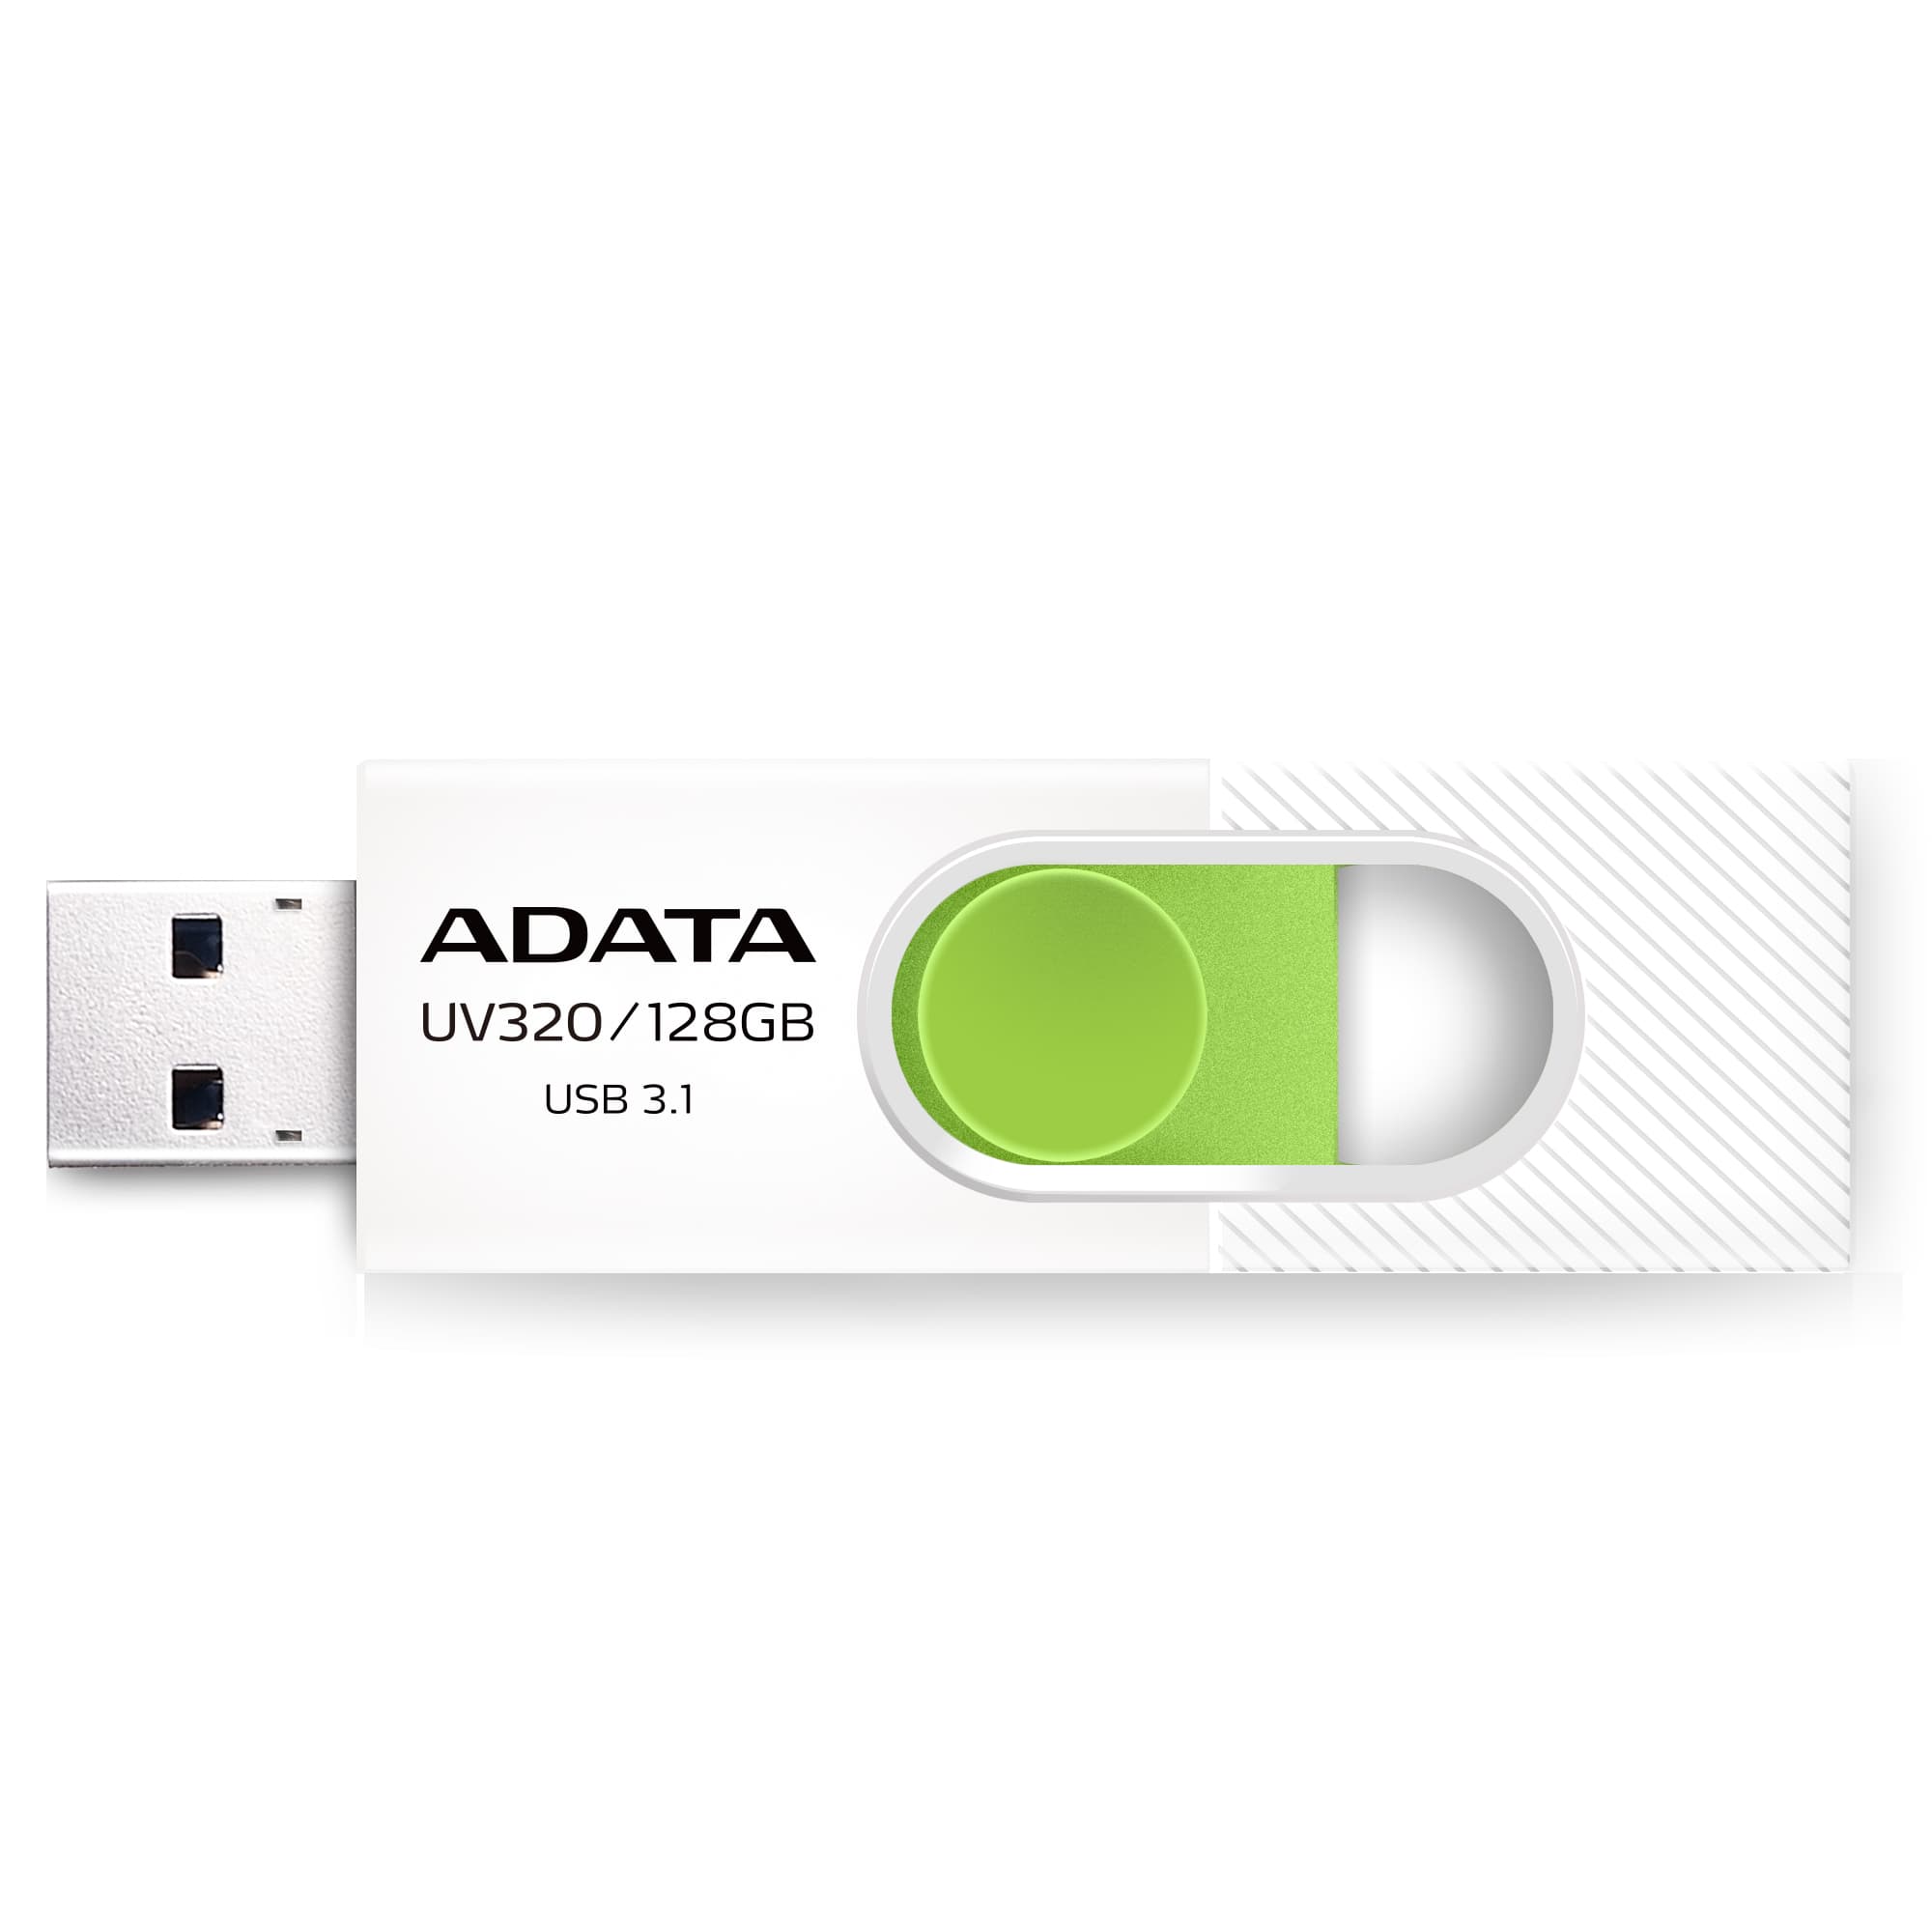 Flash Drive A-Data UV320 128GB USB 3.1 White-Green